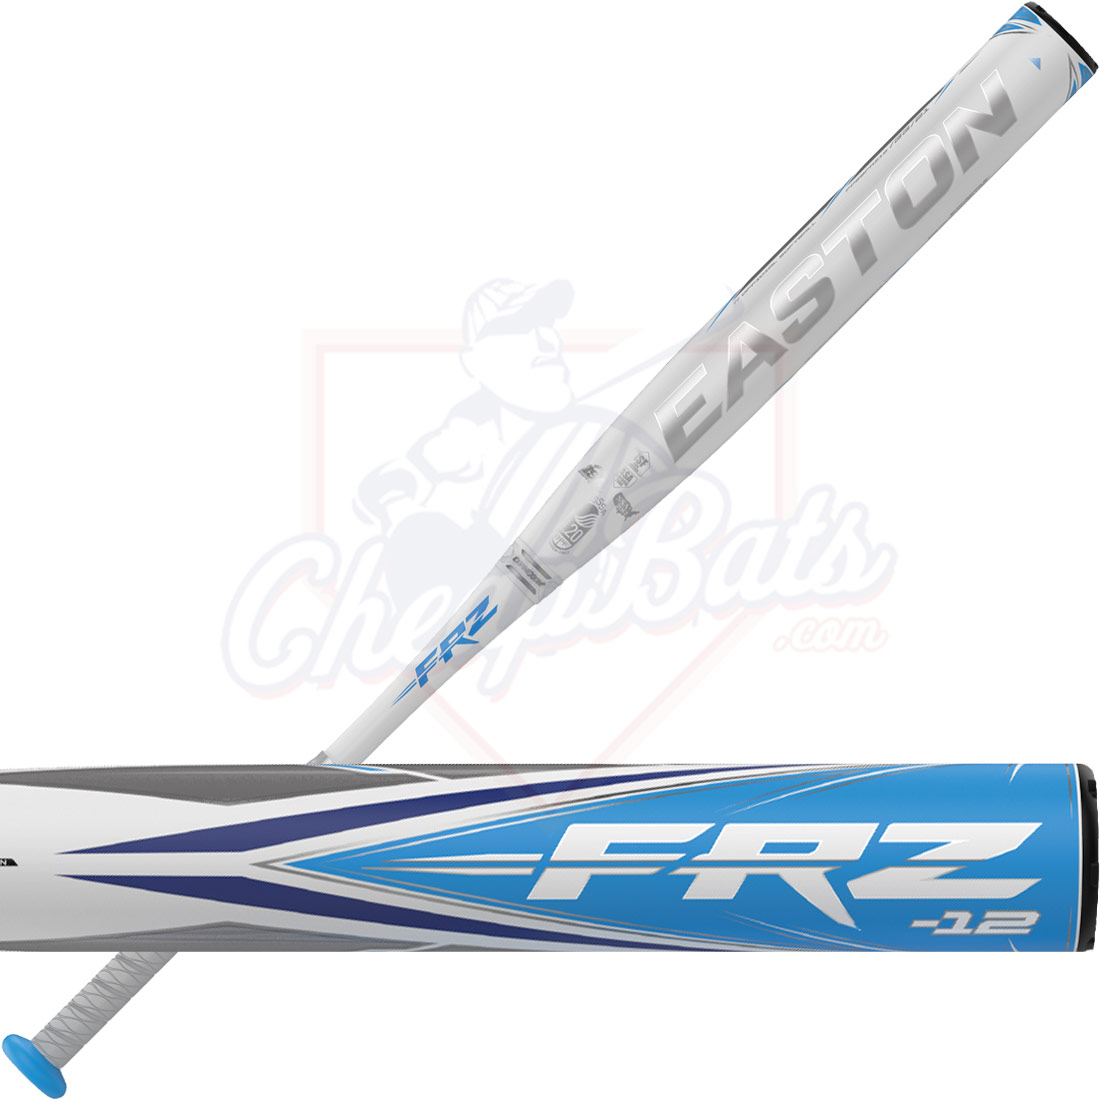 2020 Easton FRZ Fastpitch Softball Bat -12oz FP20FRZ12